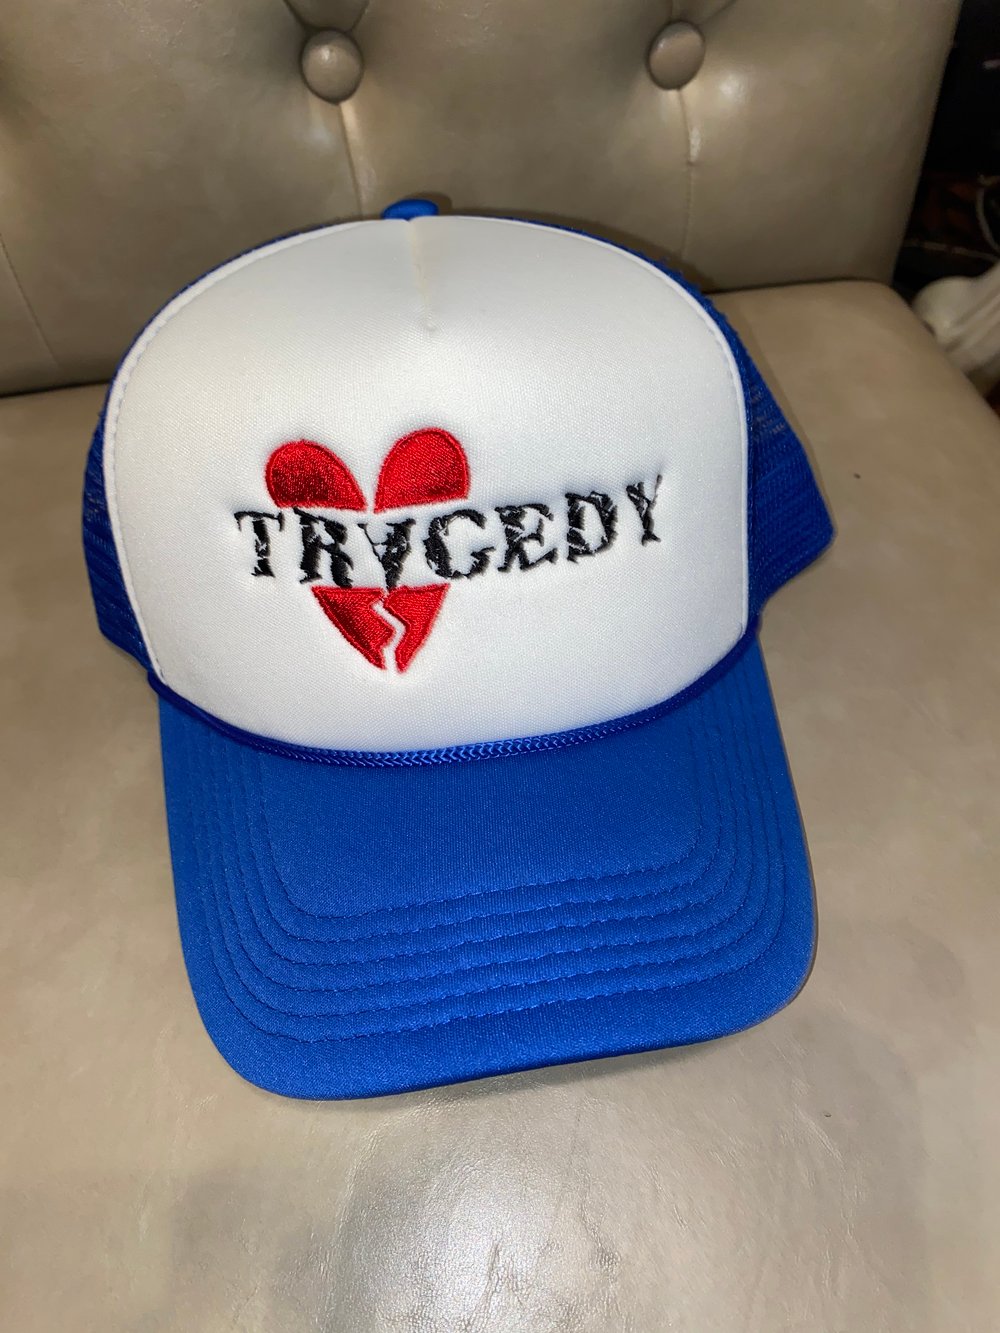 Tragedy Trucker Hats